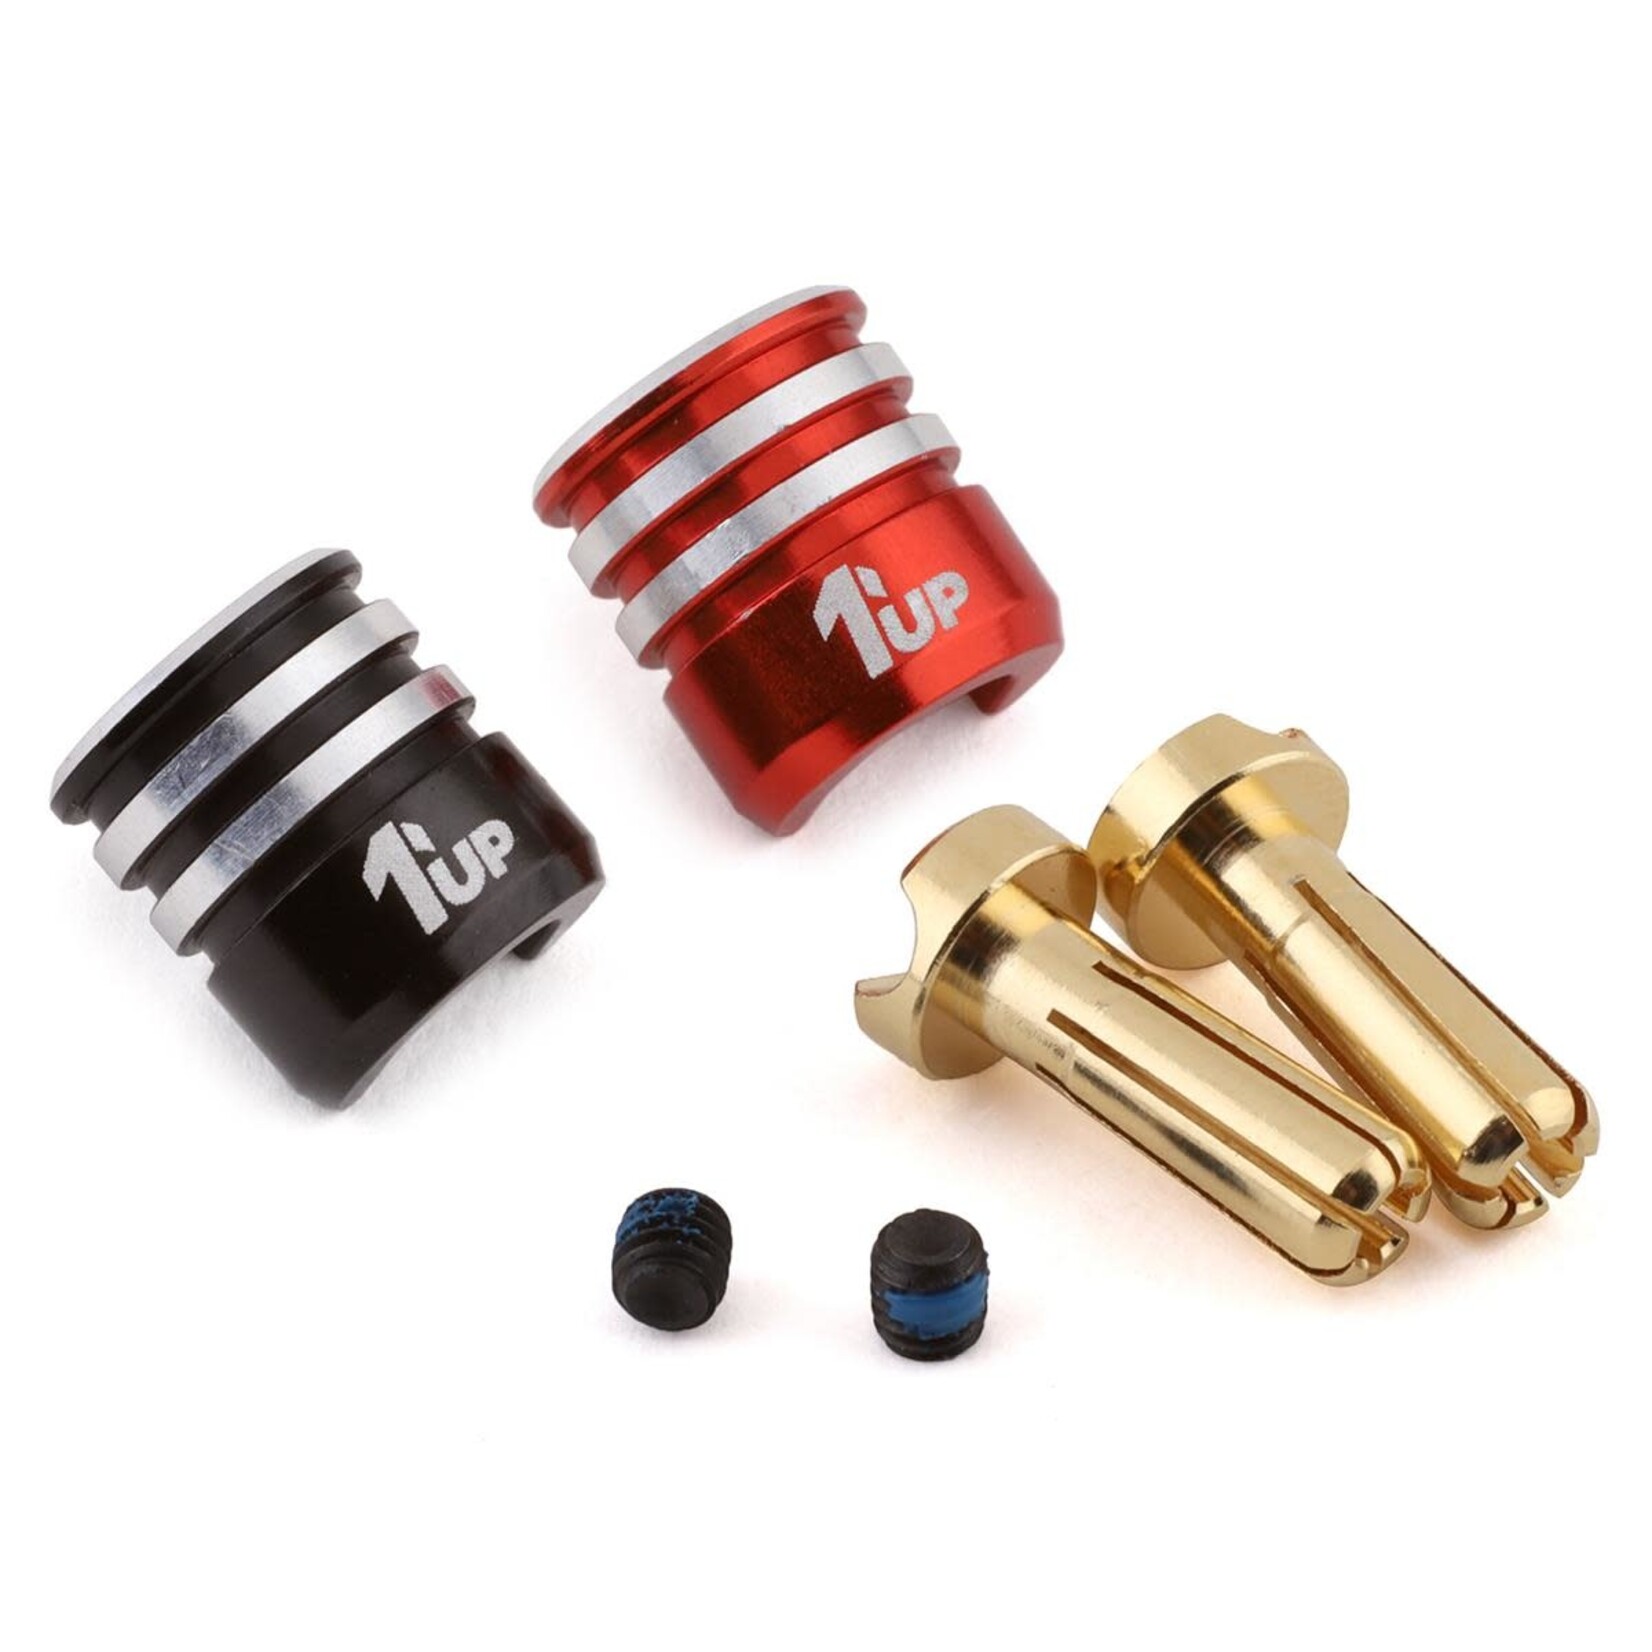 1UP 1UP190435 1Up Racing Heatsink Bullet Plugs & Grips - 4mm